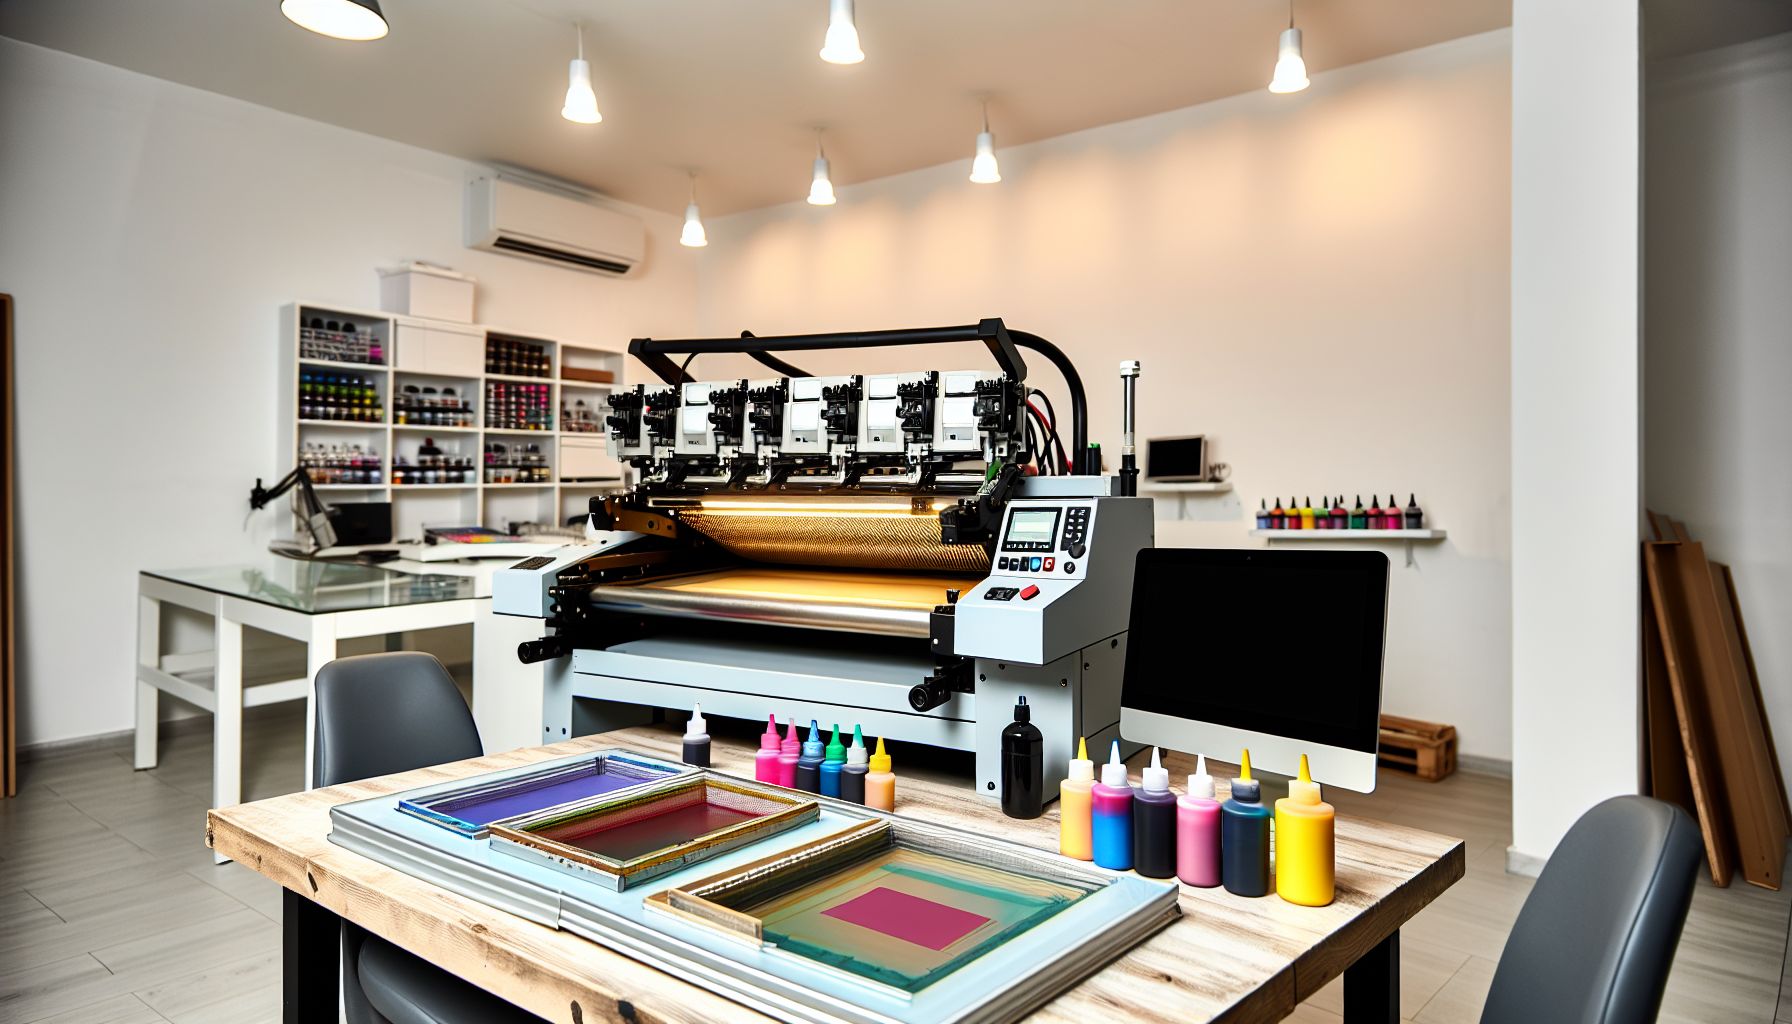 T-shirt printing business equipment